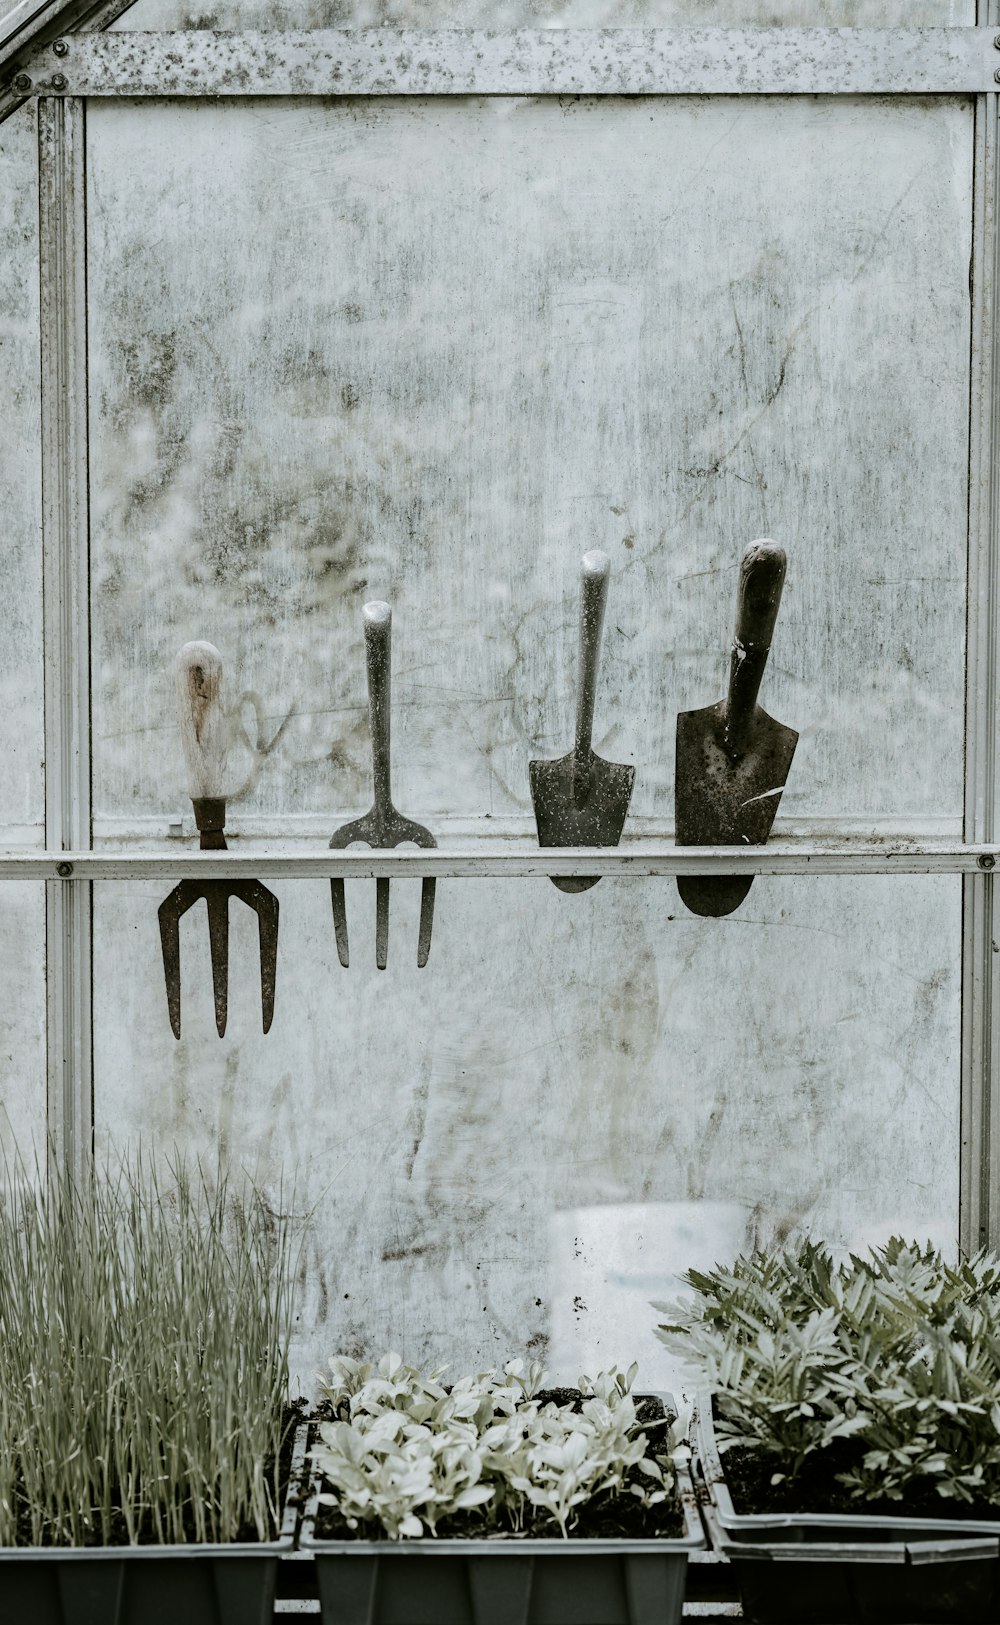 four handheld gardening tools on rack